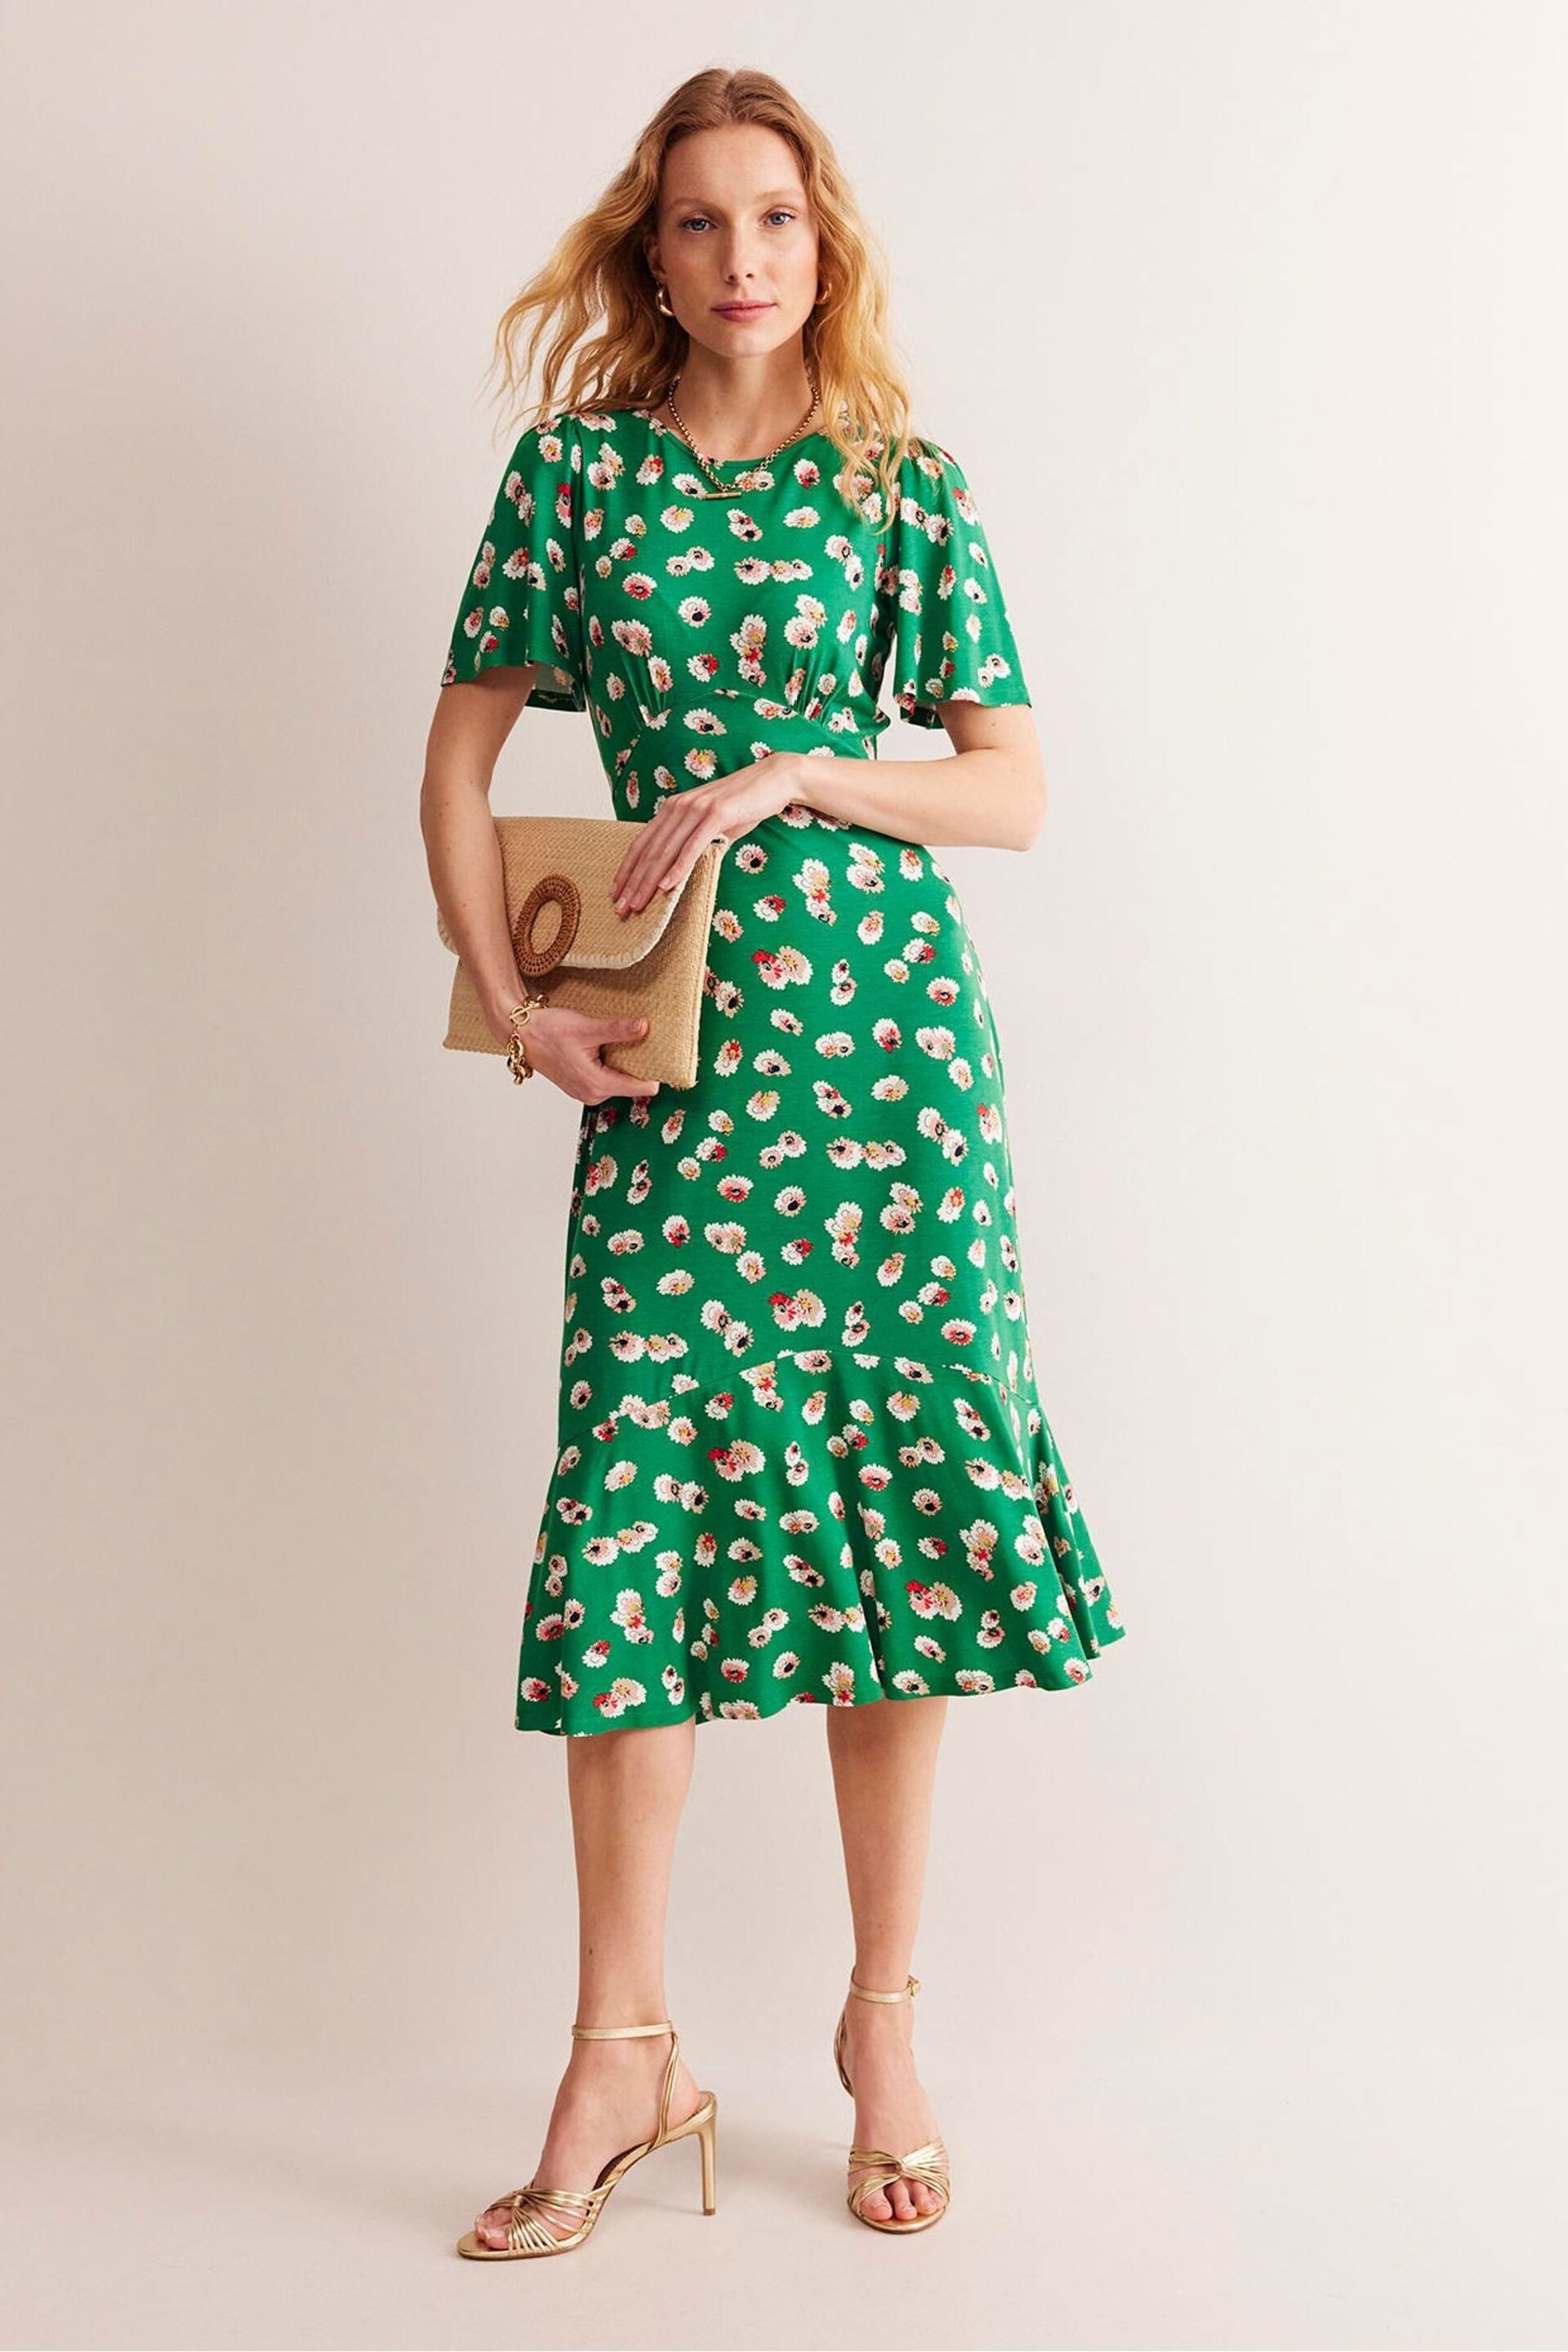 Boden Green Felicity Jersey Midi Tea Dress - Image 4 of 5